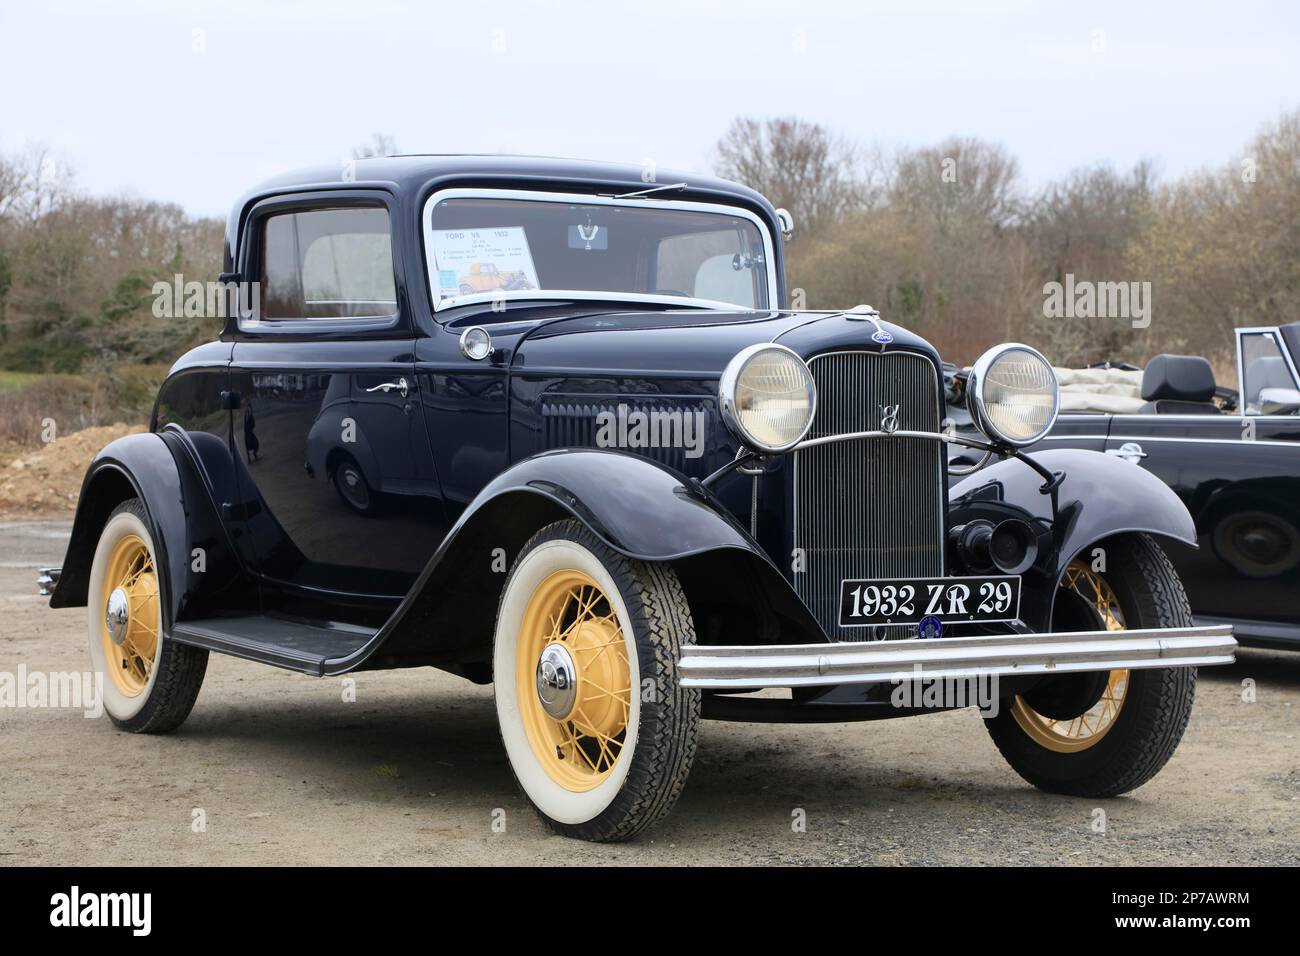 Ford V8 modello 18 Coupe dal 1932, Classic Car Meeting, Plougastel-Daoulas, Finistere, Bretagna, Francia Foto Stock